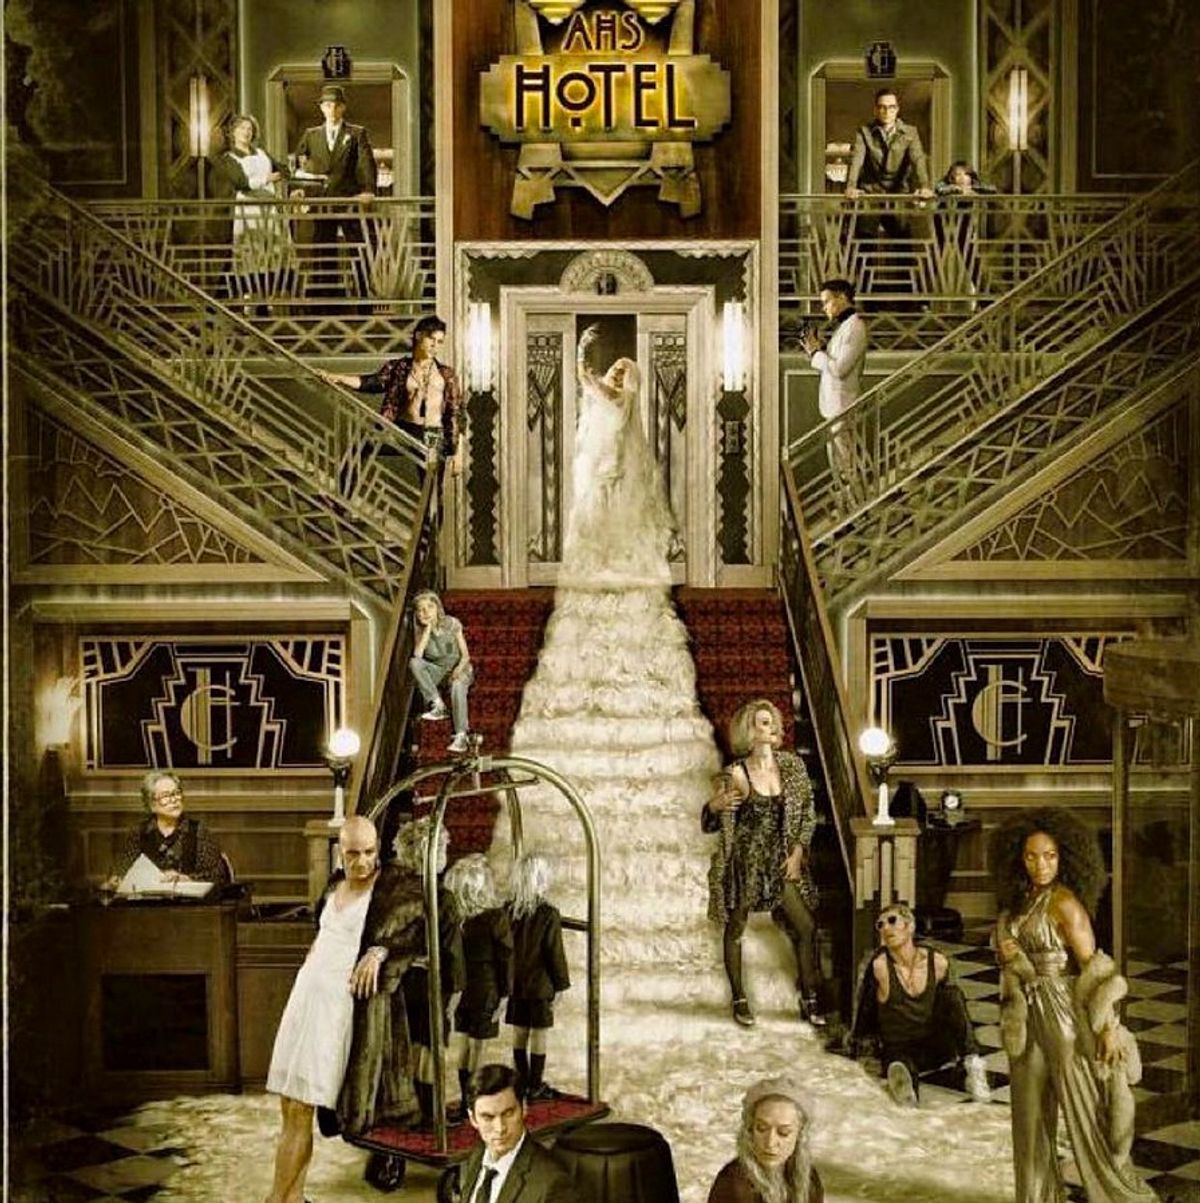 Spooky Spotlight - "American Horror Story: Hotel"